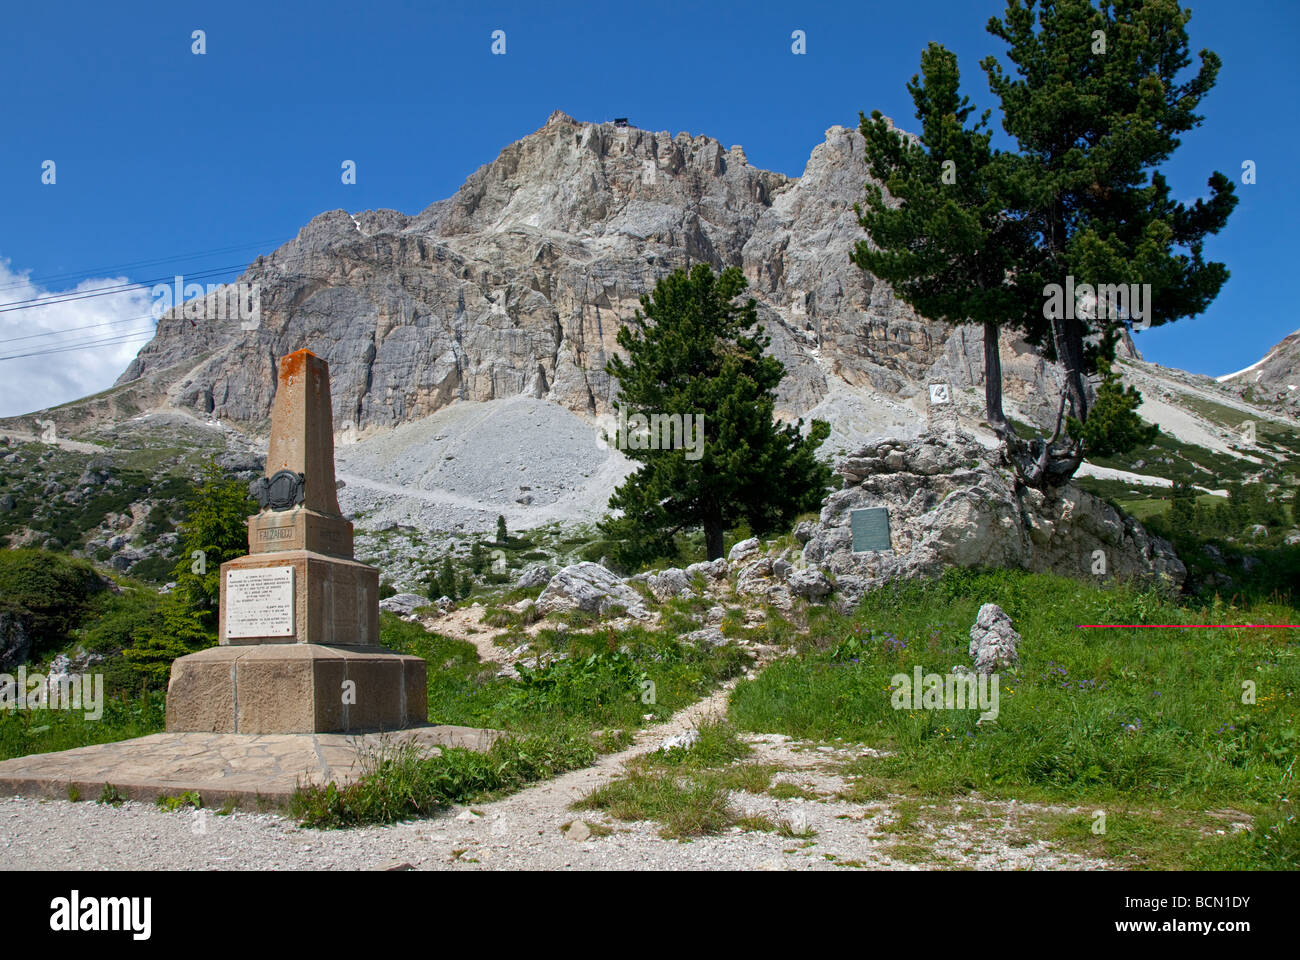 Denkmal und Mount Lagazuoi, Falzarego-Pass, Dolomiten, Italien Stockfoto